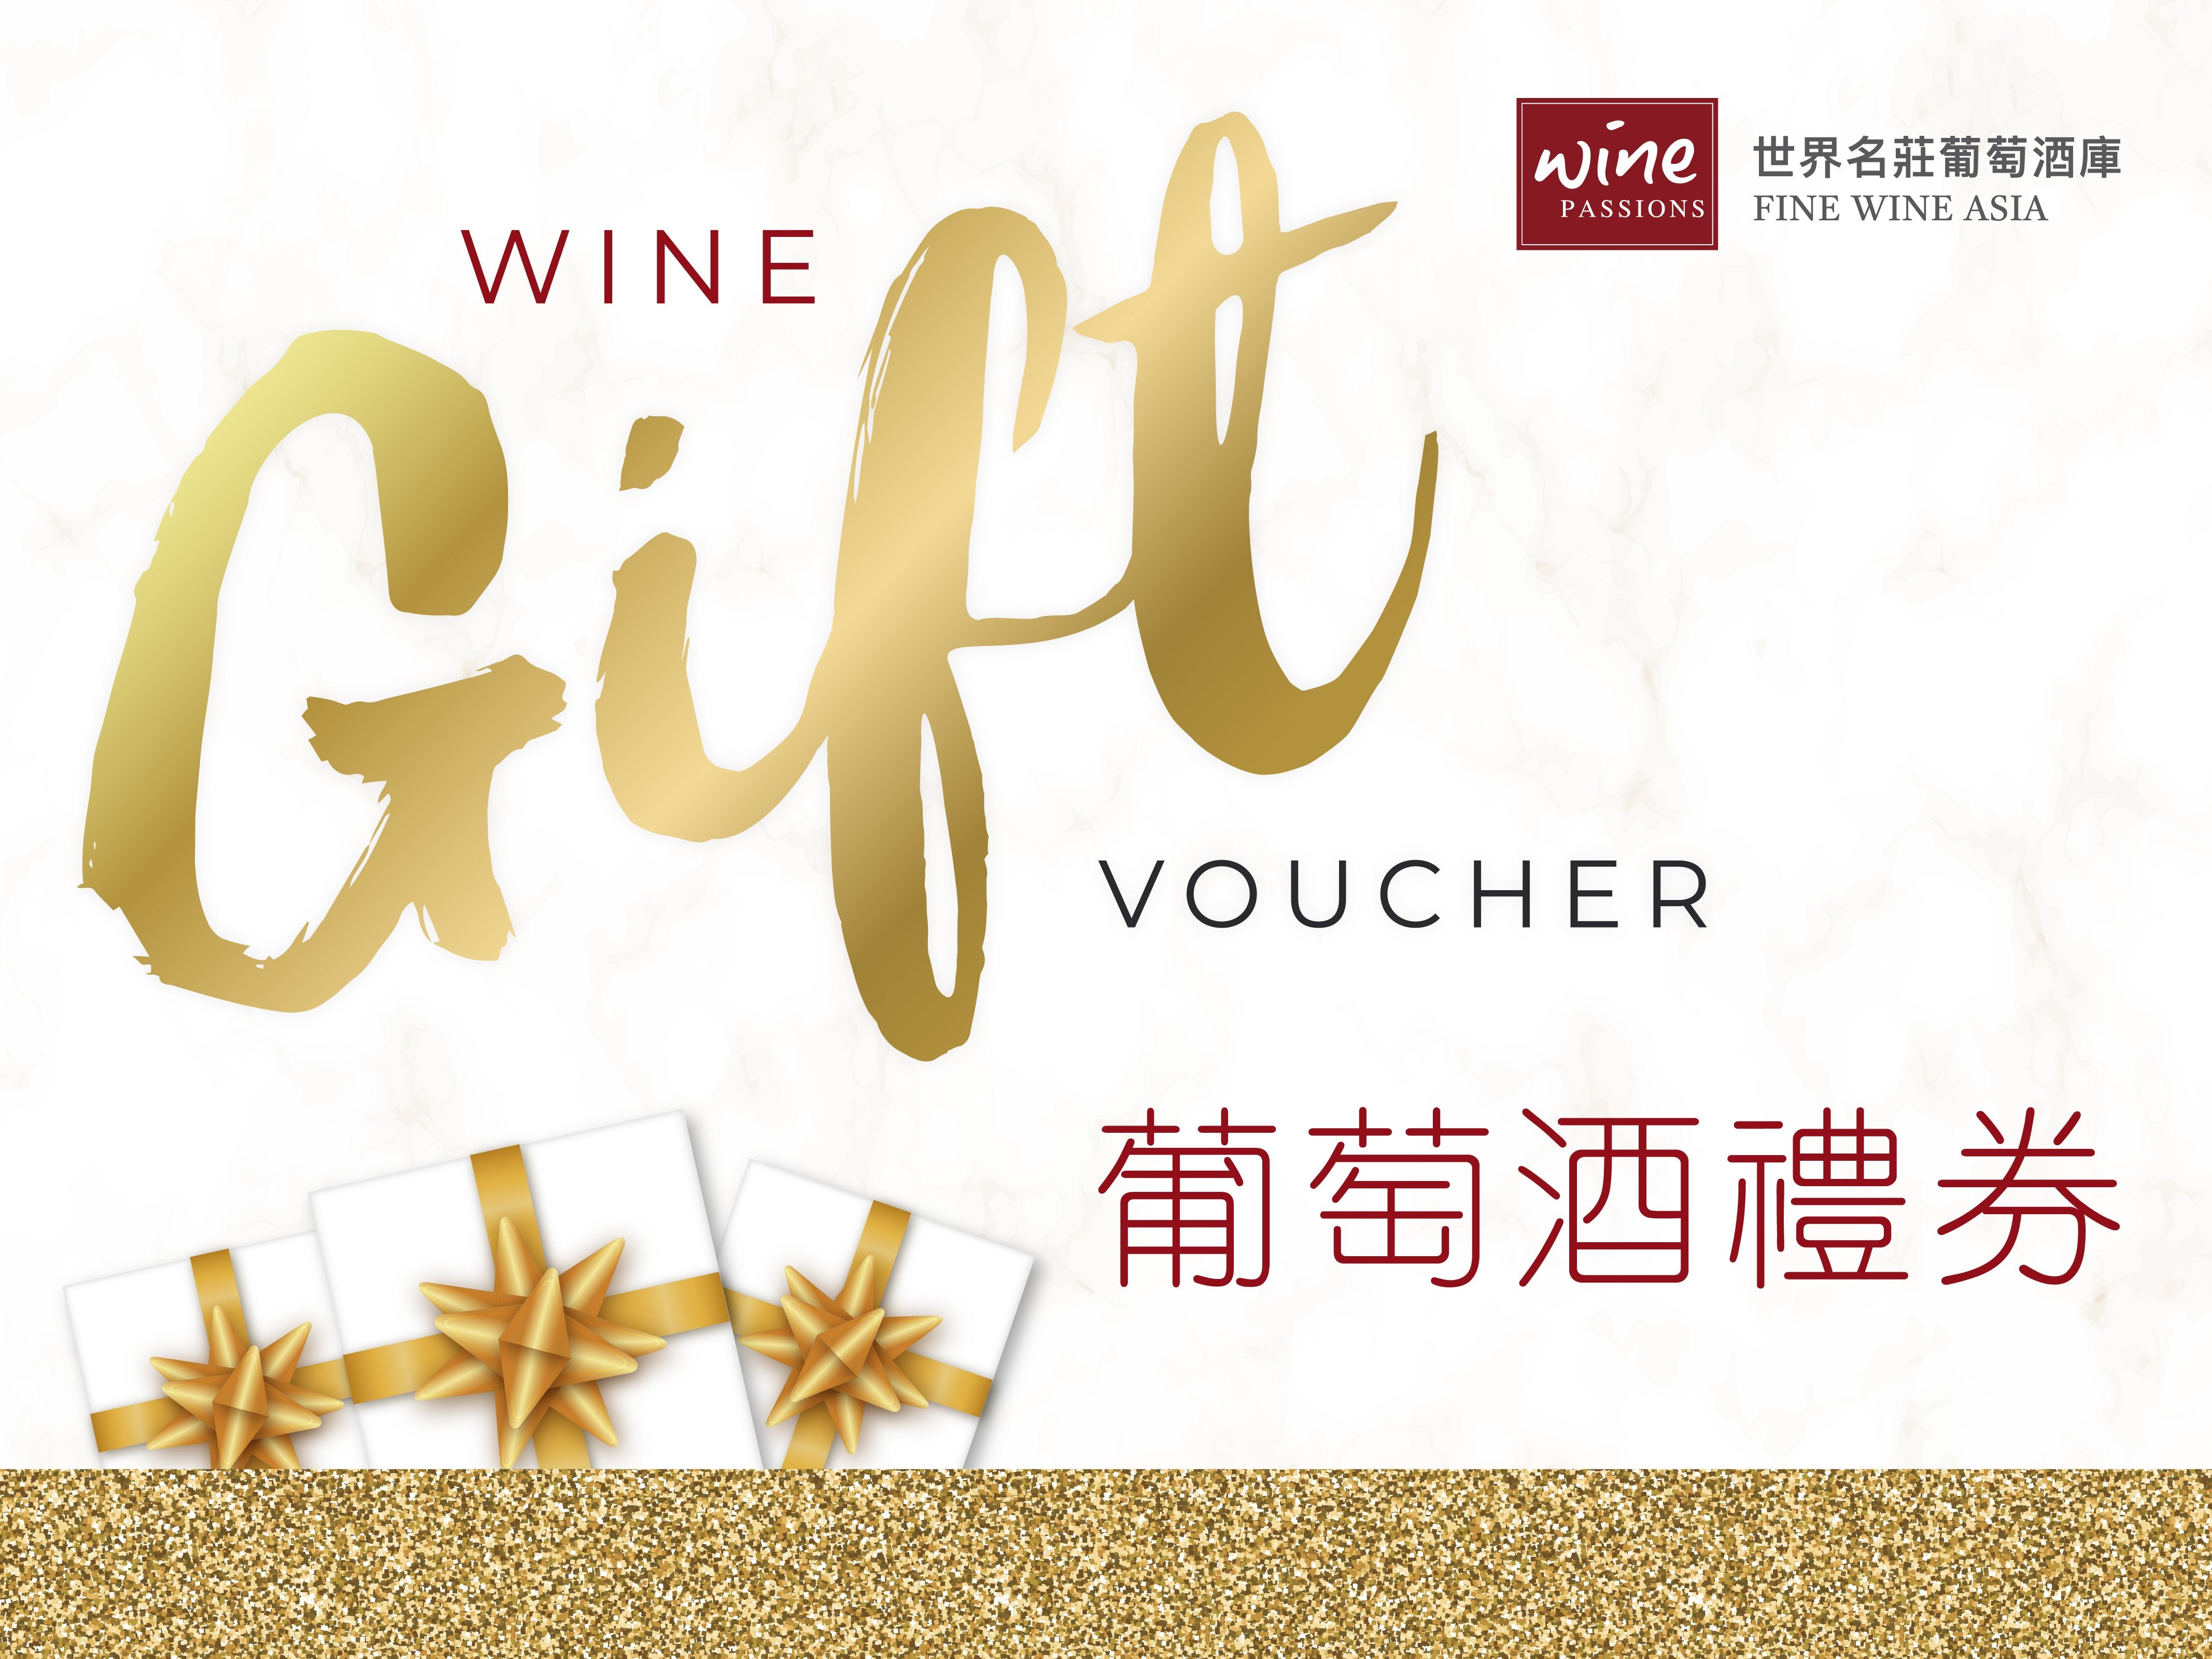 Fine Wine Asia Gift Card 葡萄酒禮券